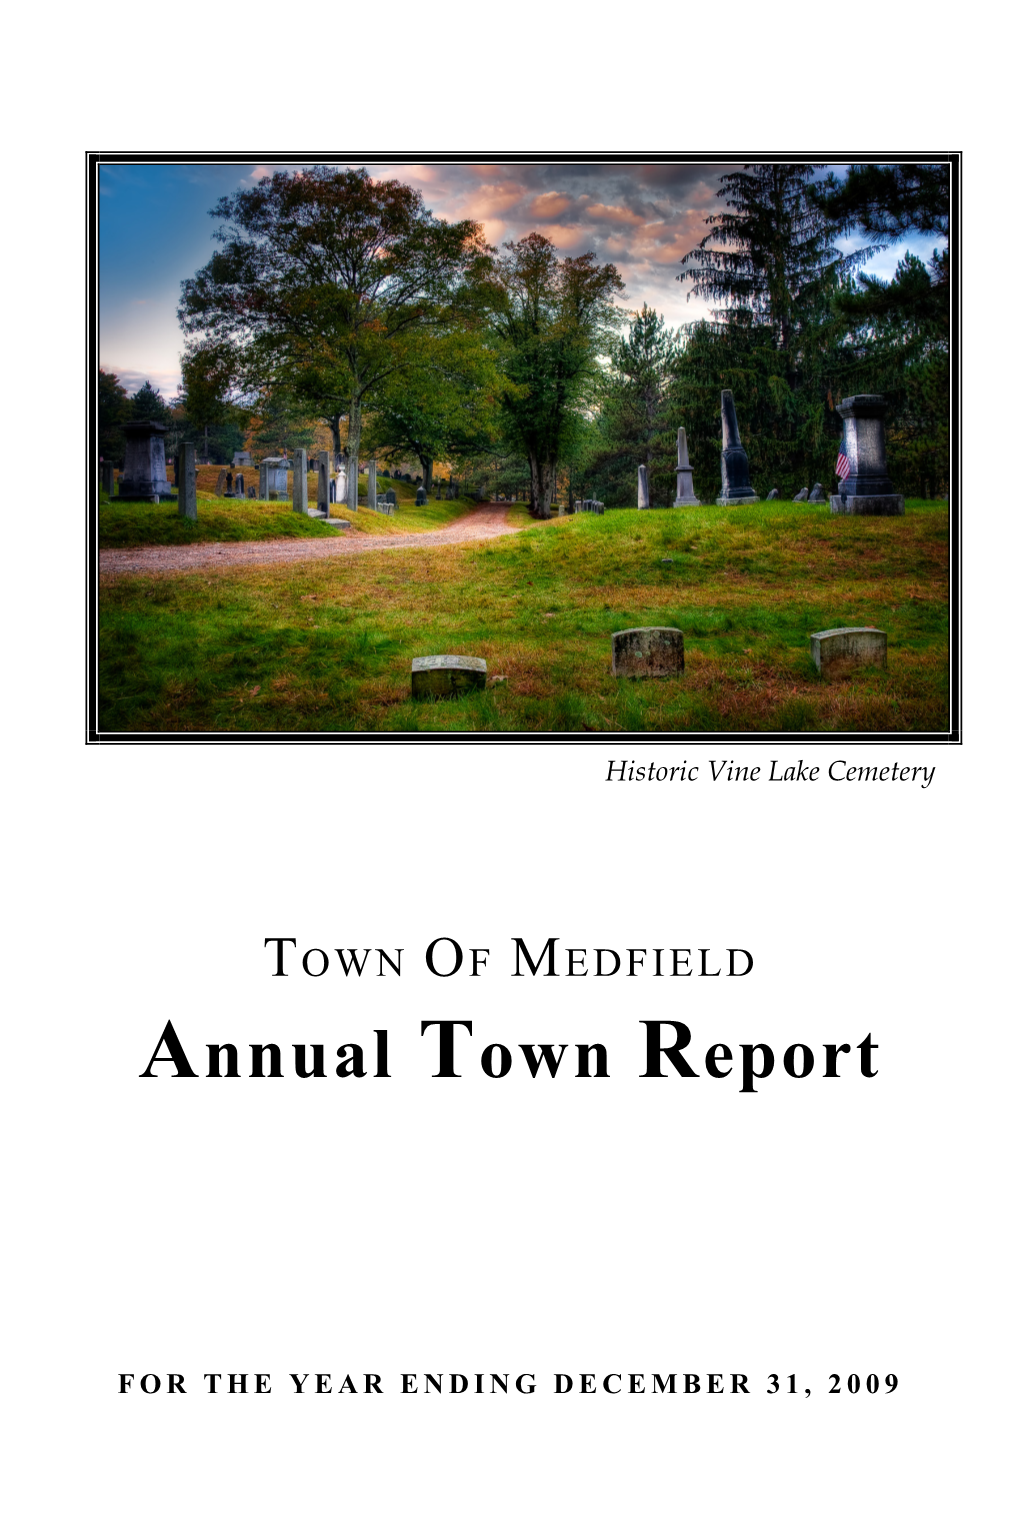 2009 Annual Town Report (PDF)